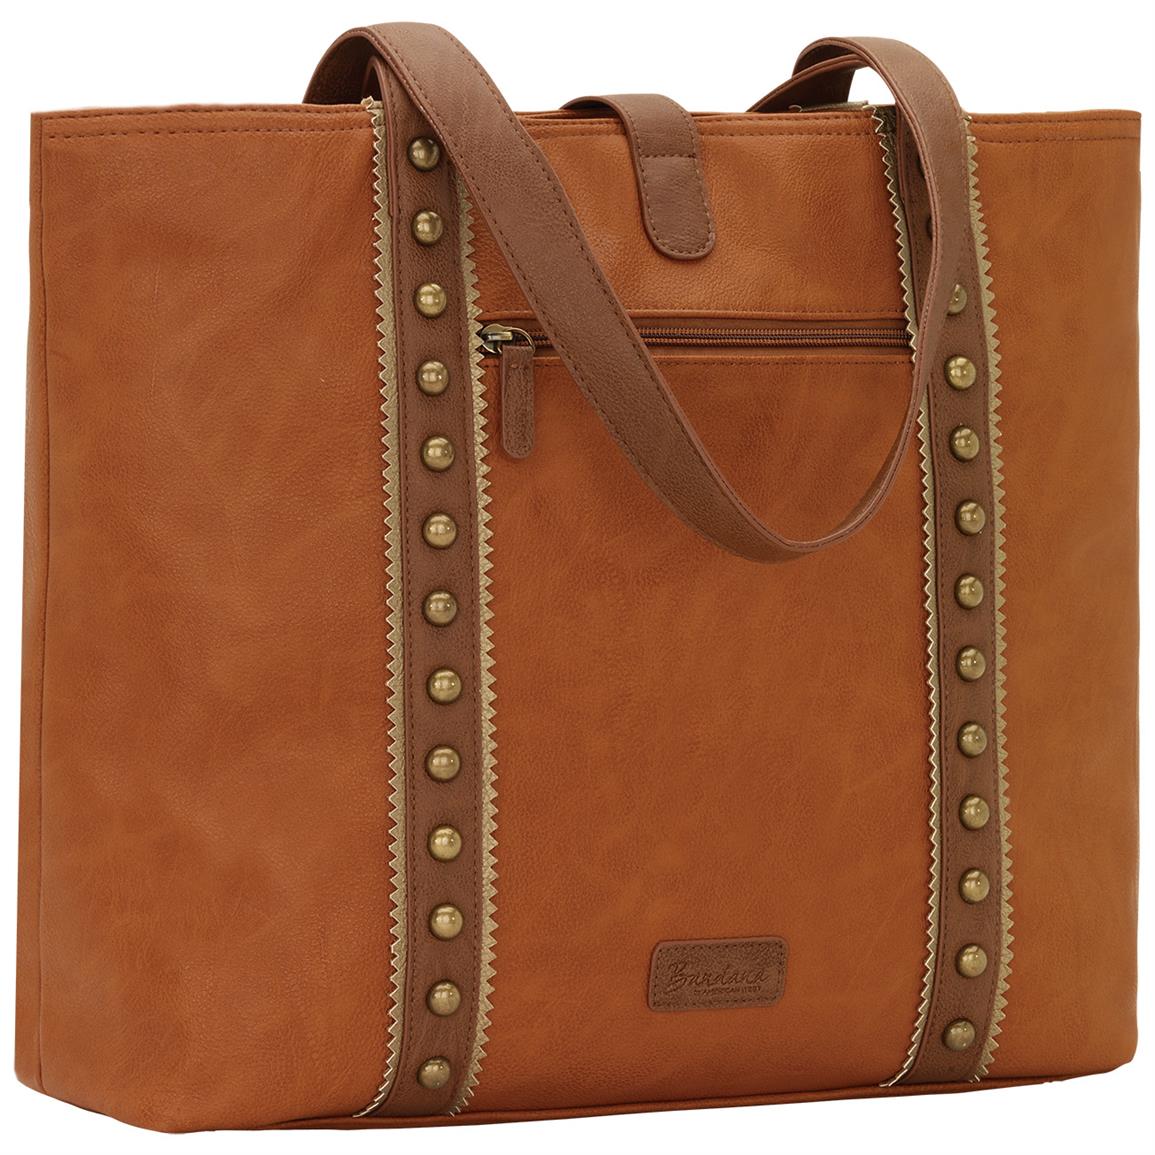 American West Bandana Oak Creek Large Shopper Tote Bag - 668497, Purses & Handbags at Sportsman ...